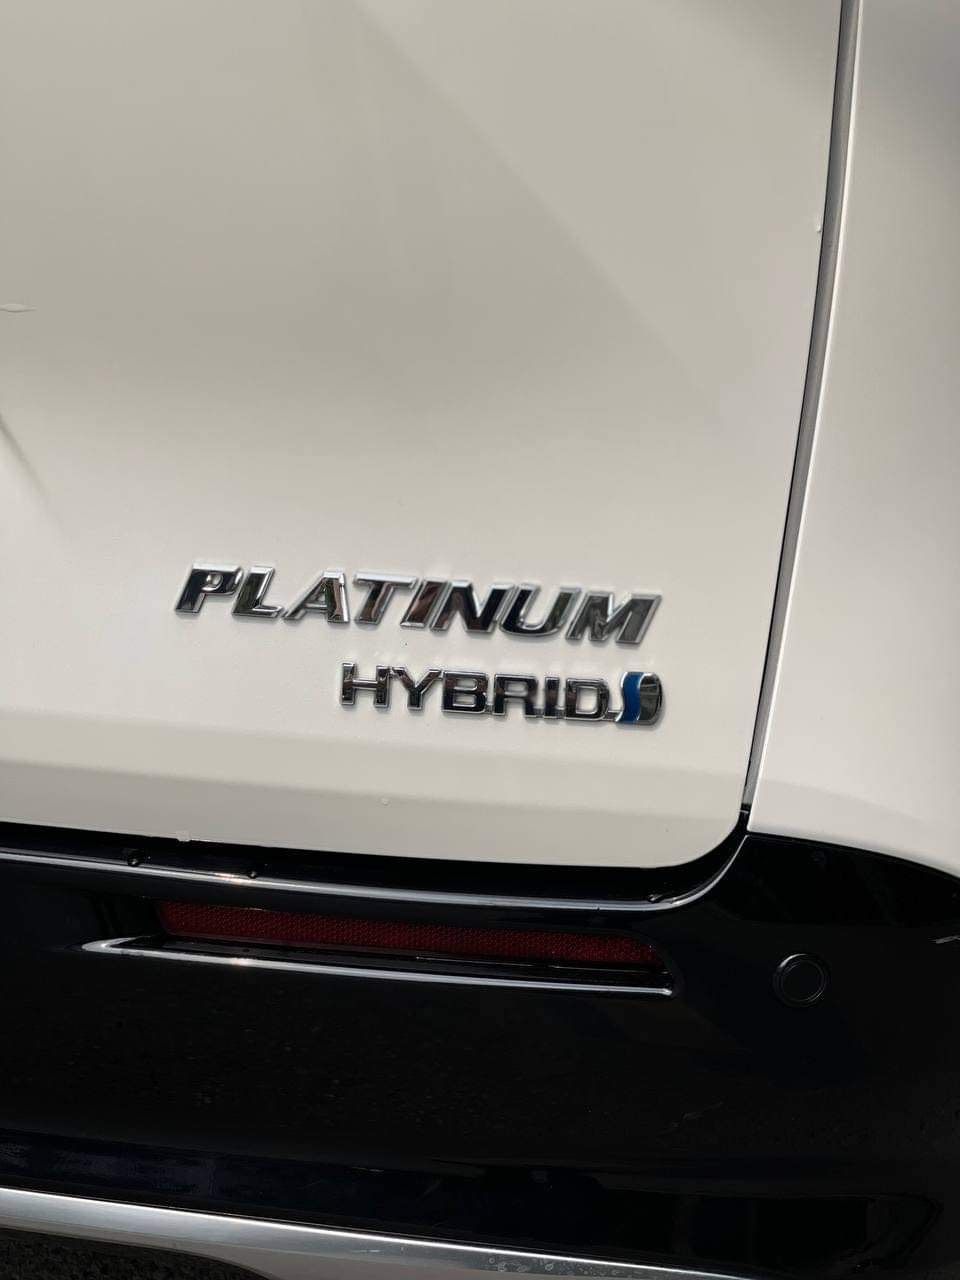 Toyota Sienna 2021 - Nhập Mỹ, biển vip